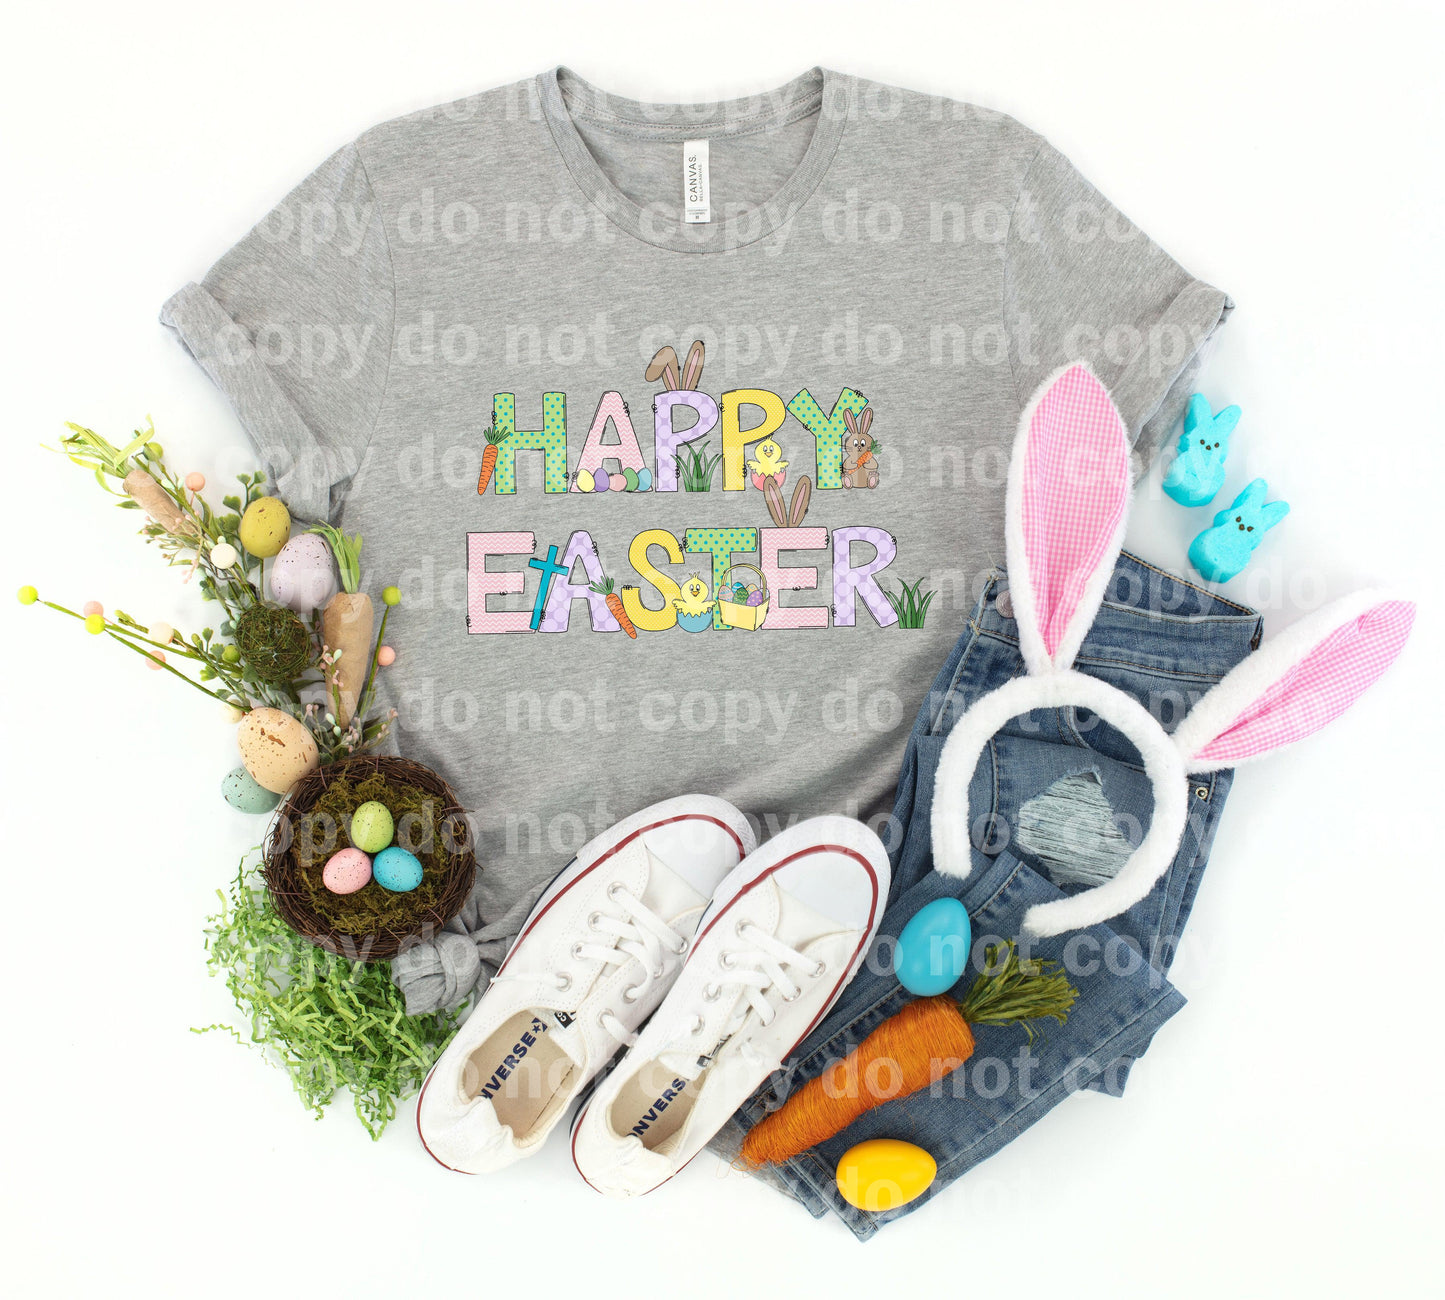 Happy Easter Egg Bunny Dream print transfer